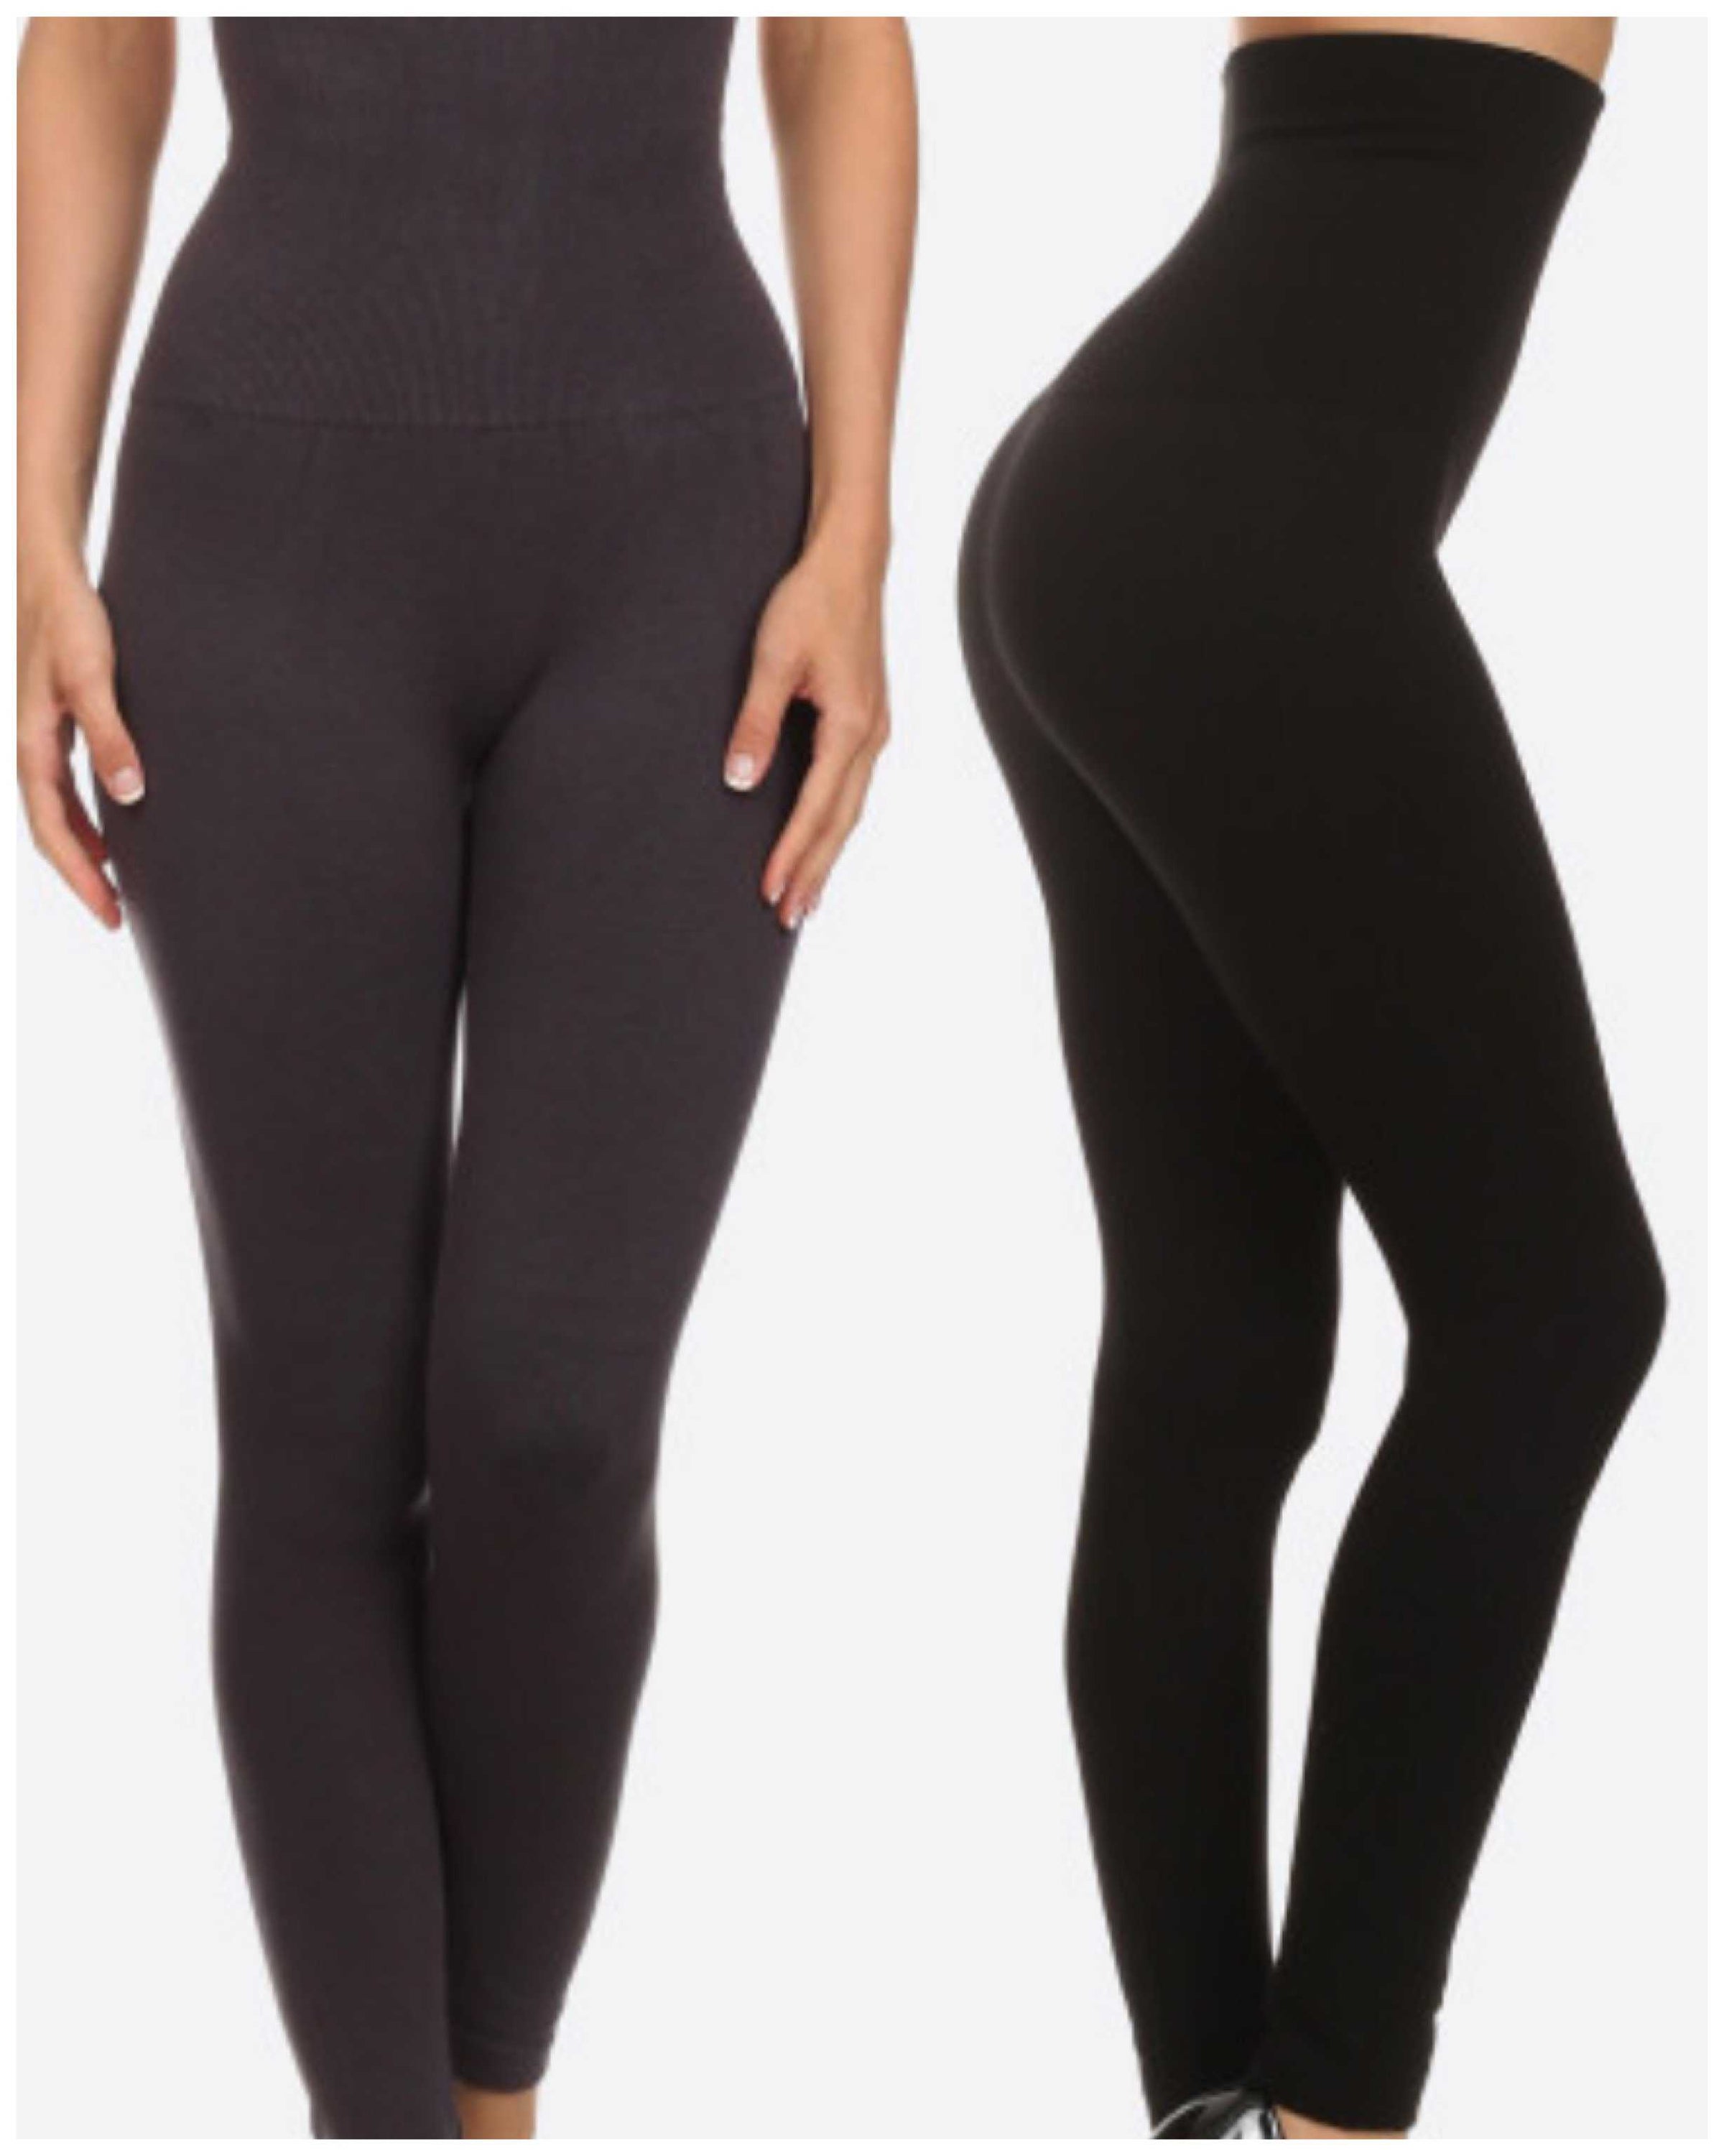 Yelete leg wear. Very High waisted leggings. One size. Grey. - $20 - From  Jill